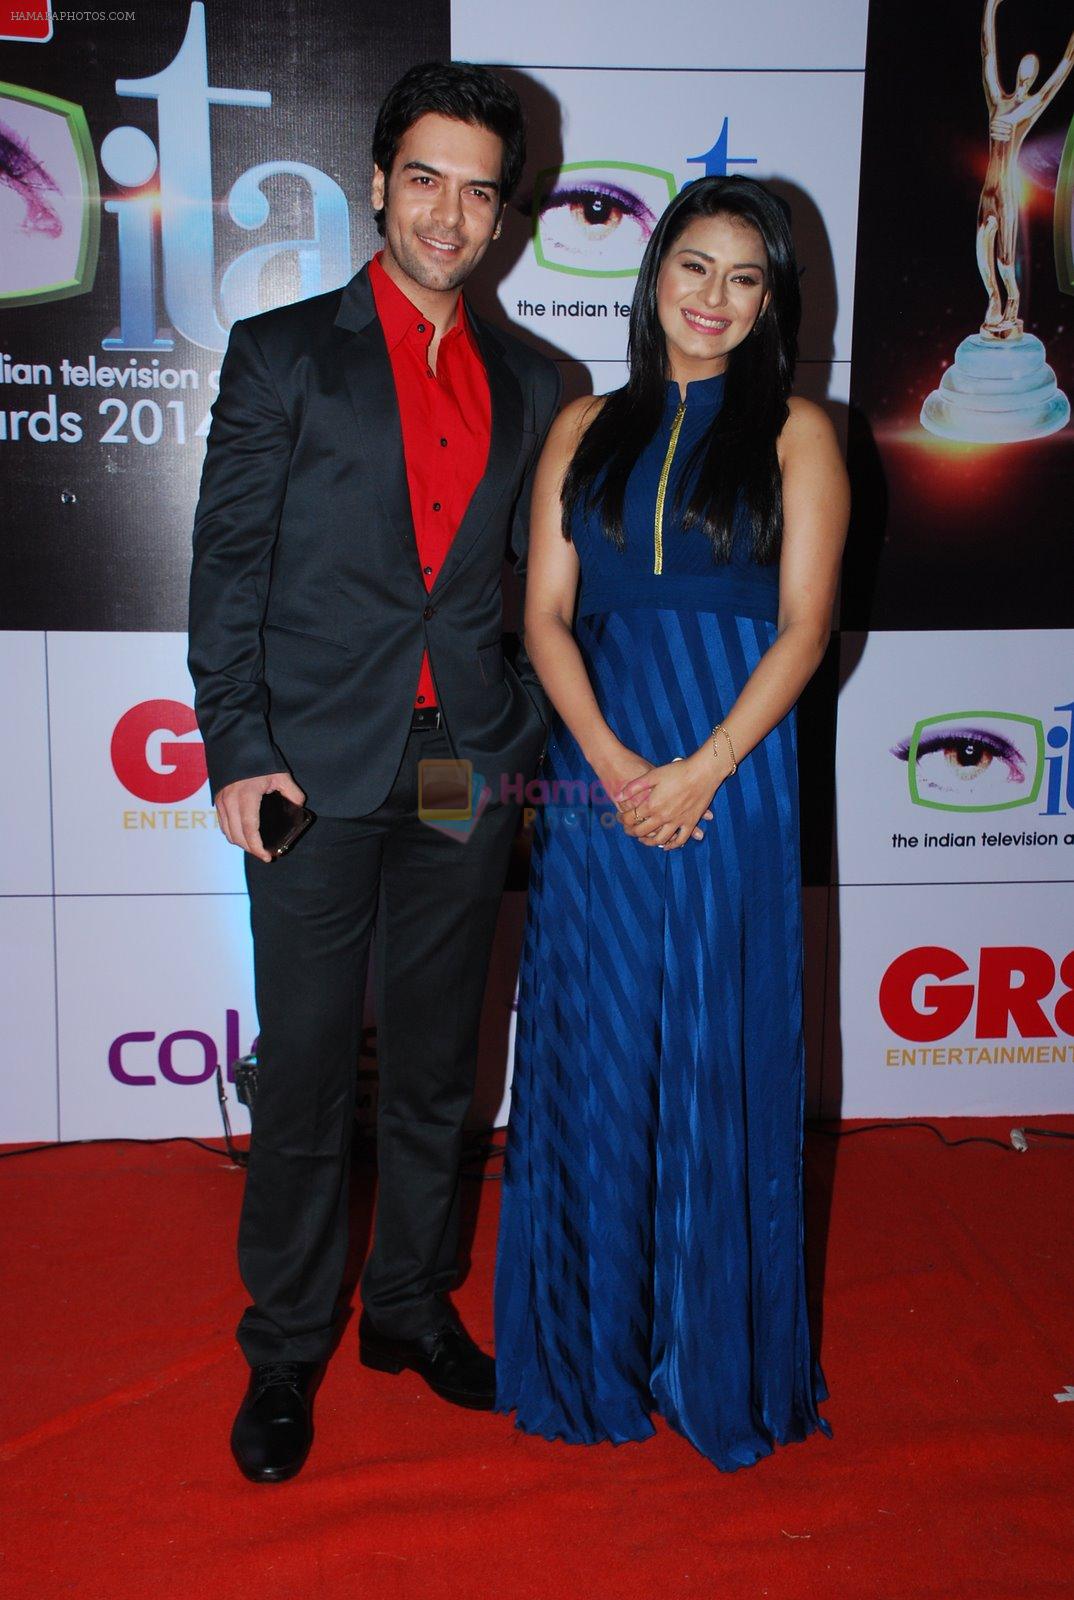 Diyali Chauhan at ITA Awards red carpet in Mumbai on 1st Nov 2014